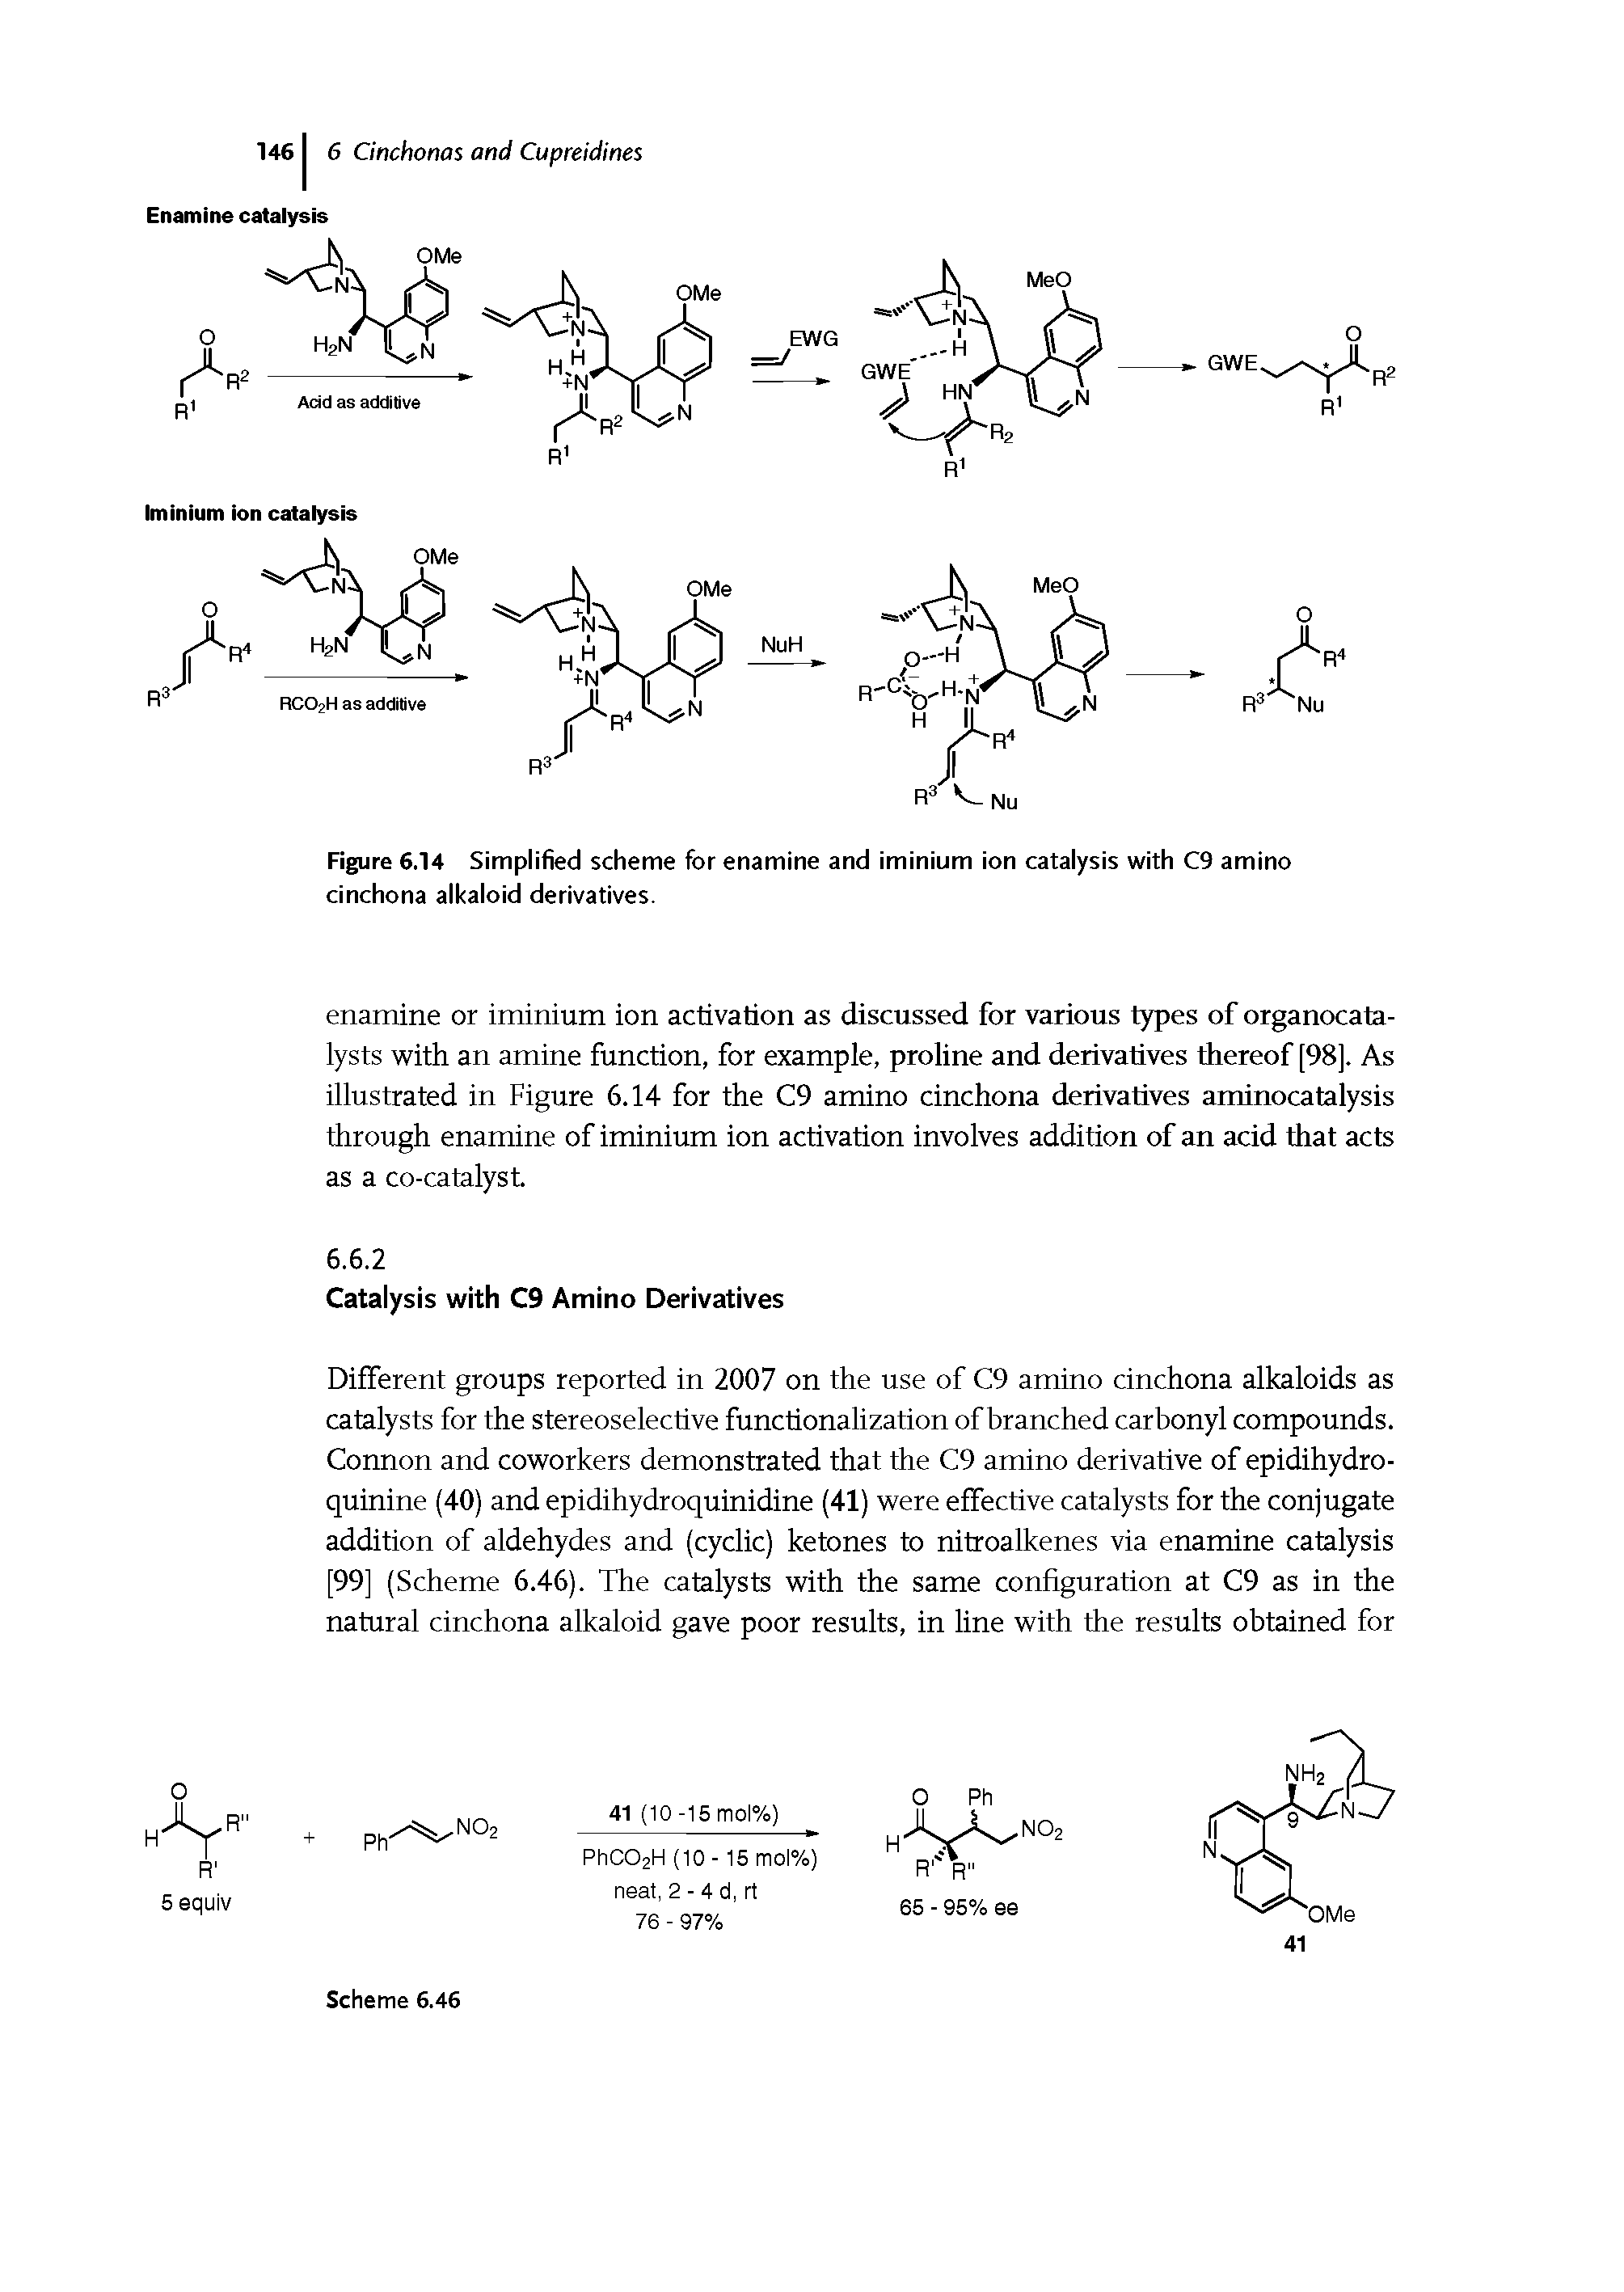 Figure 6.14 Simplified scheme for enamine and iminium ion catalysis with C9 amino cinchona alkaloid derivatives.